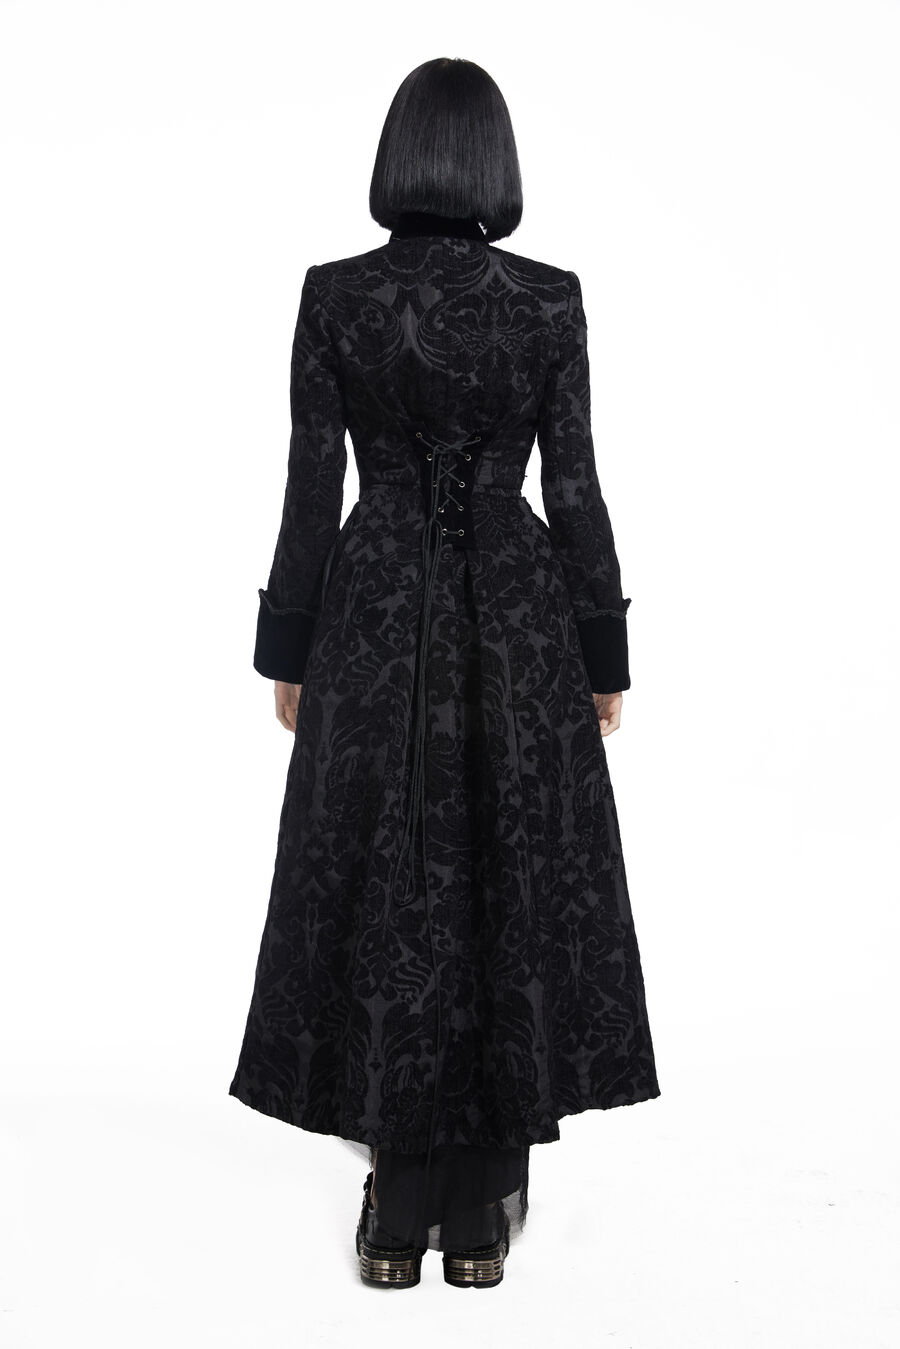 photo n°6 : Manteau long femme gothic brocard noir